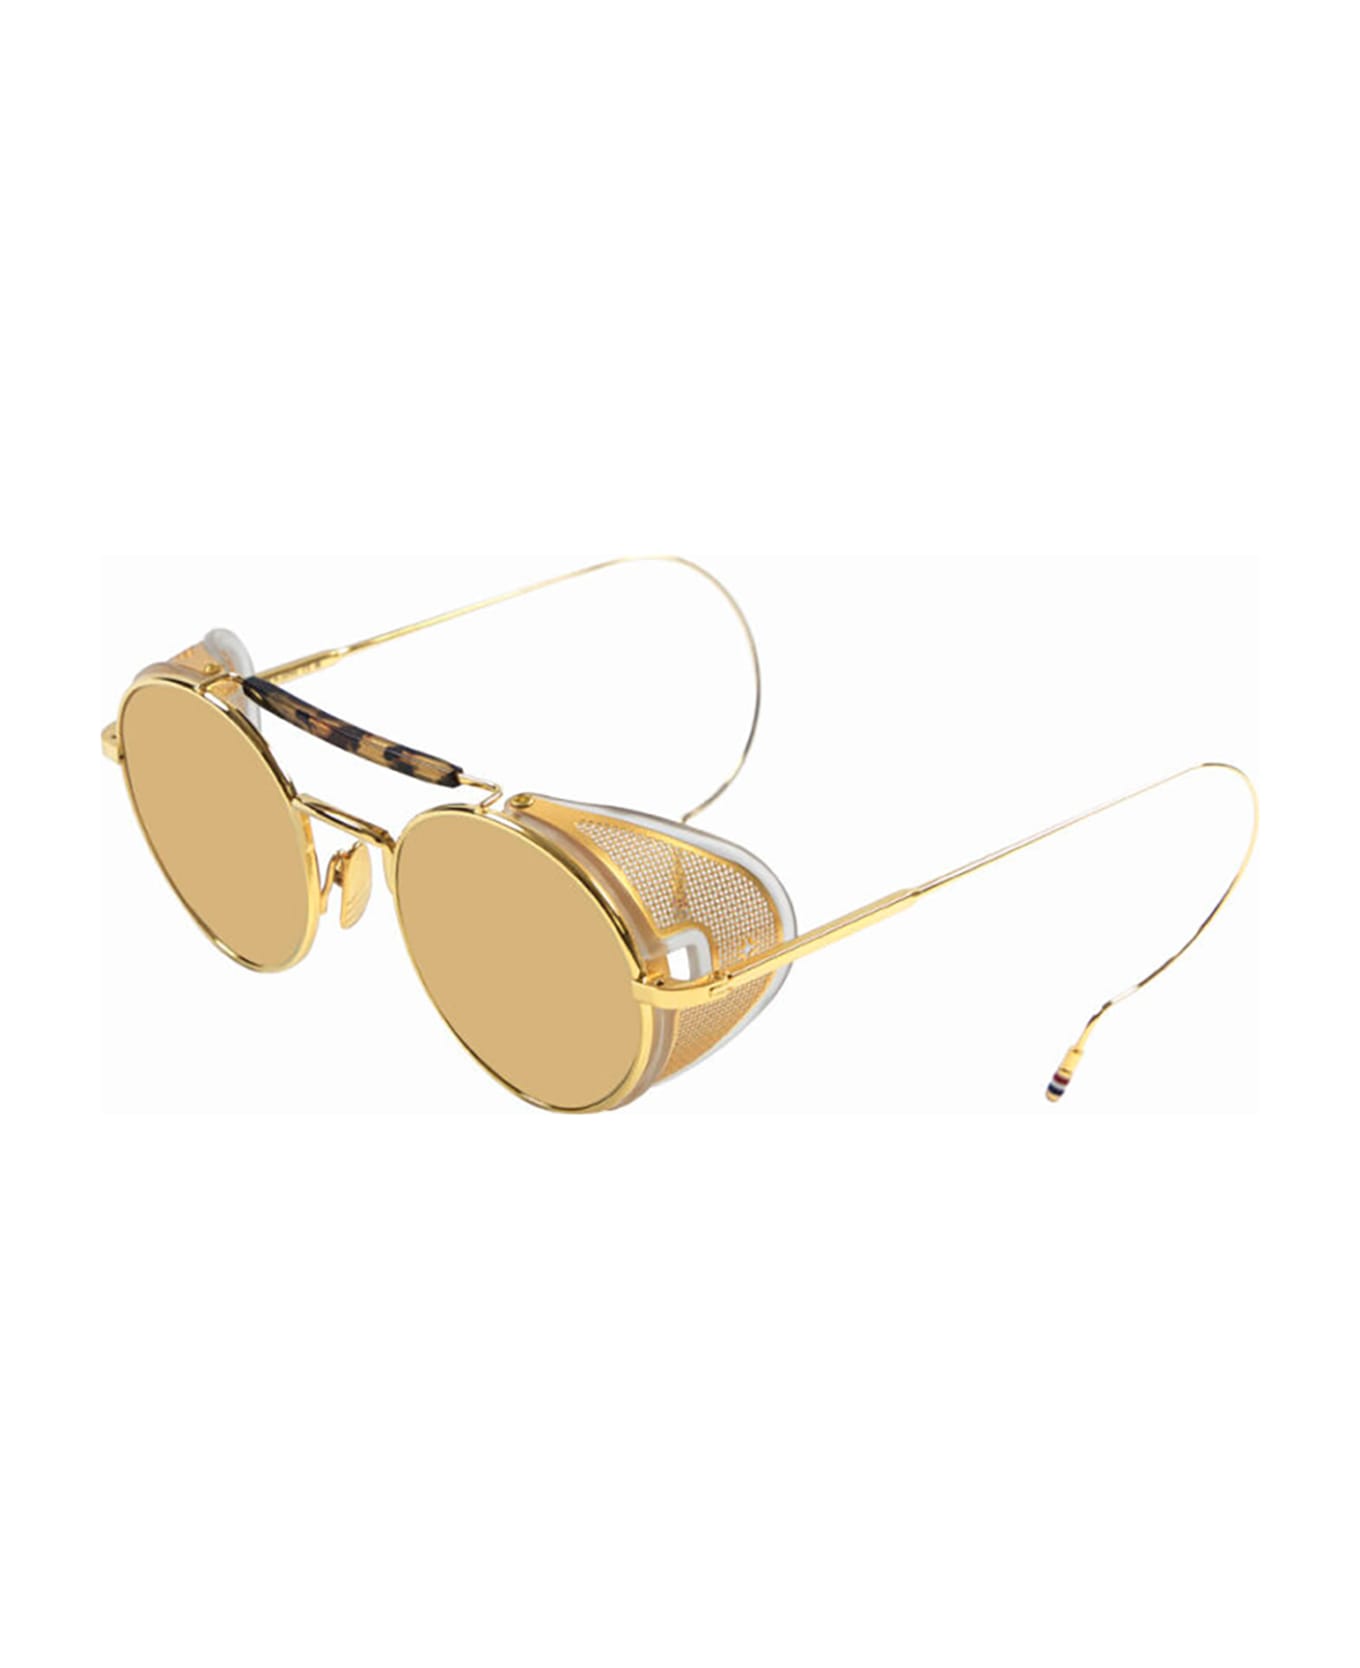 Thom Browne UES001L/G0003 Sunglasses - Yellow Gold